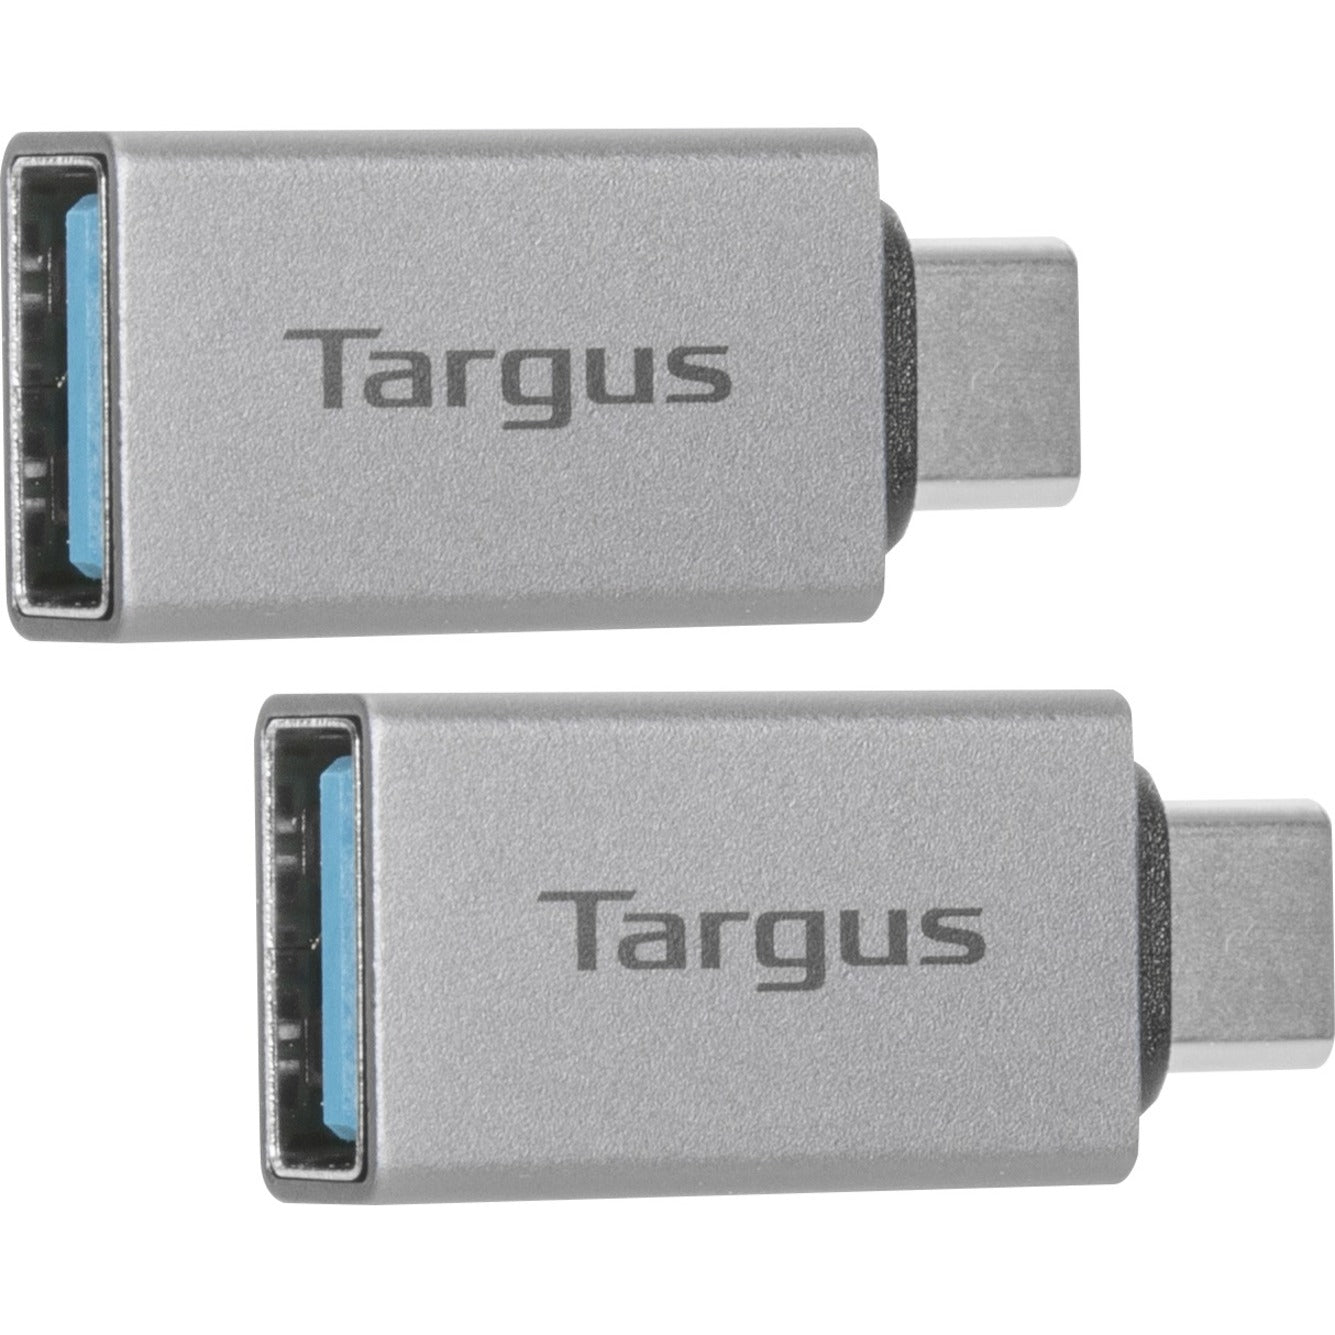 Targus ACA979GL USB/USB-C 数据传输适配器 - 灰色，2 包 Targus -> 达尔加斯